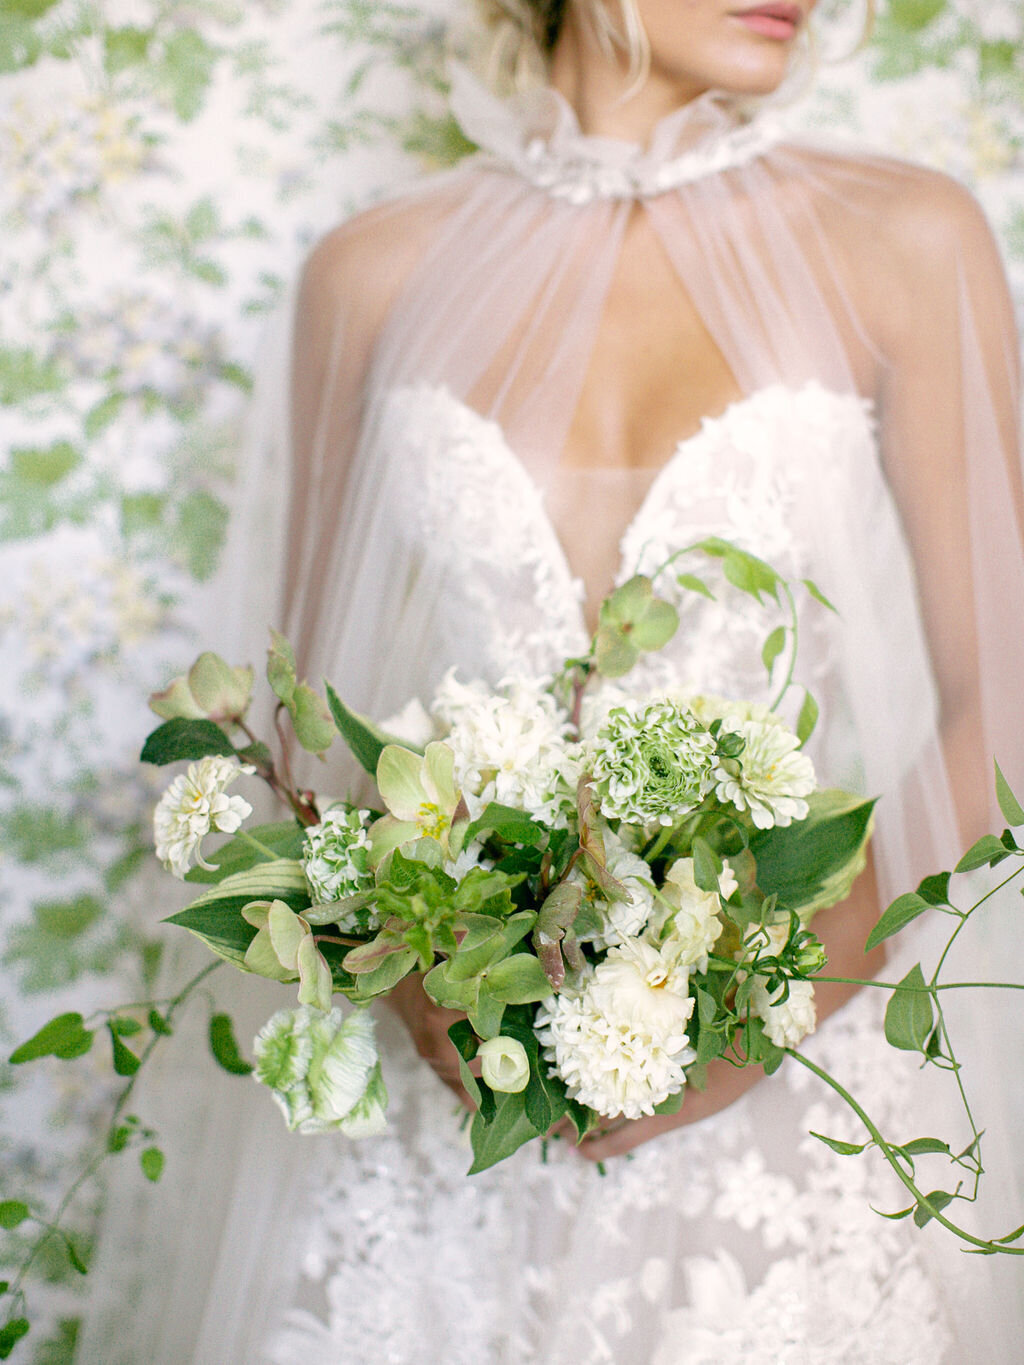 max-owens-design-english-floral-wedding-18-white-green-bouquet